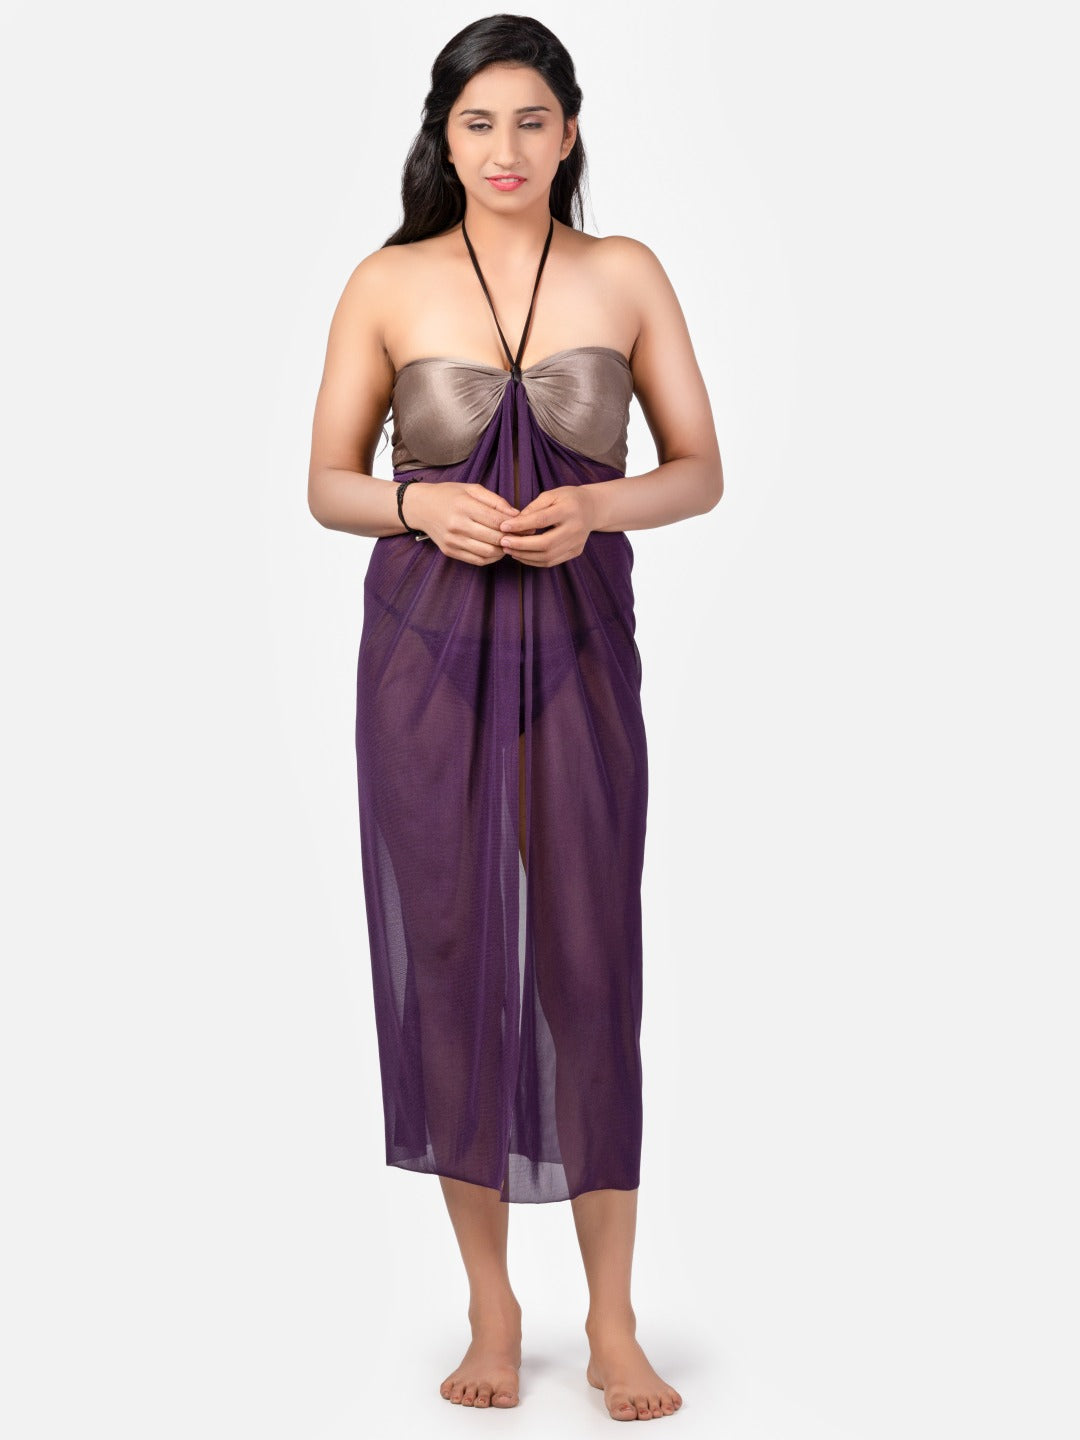 Hot Net Honeymoon Purple Babydoll Bikini Night Dress K3bmj